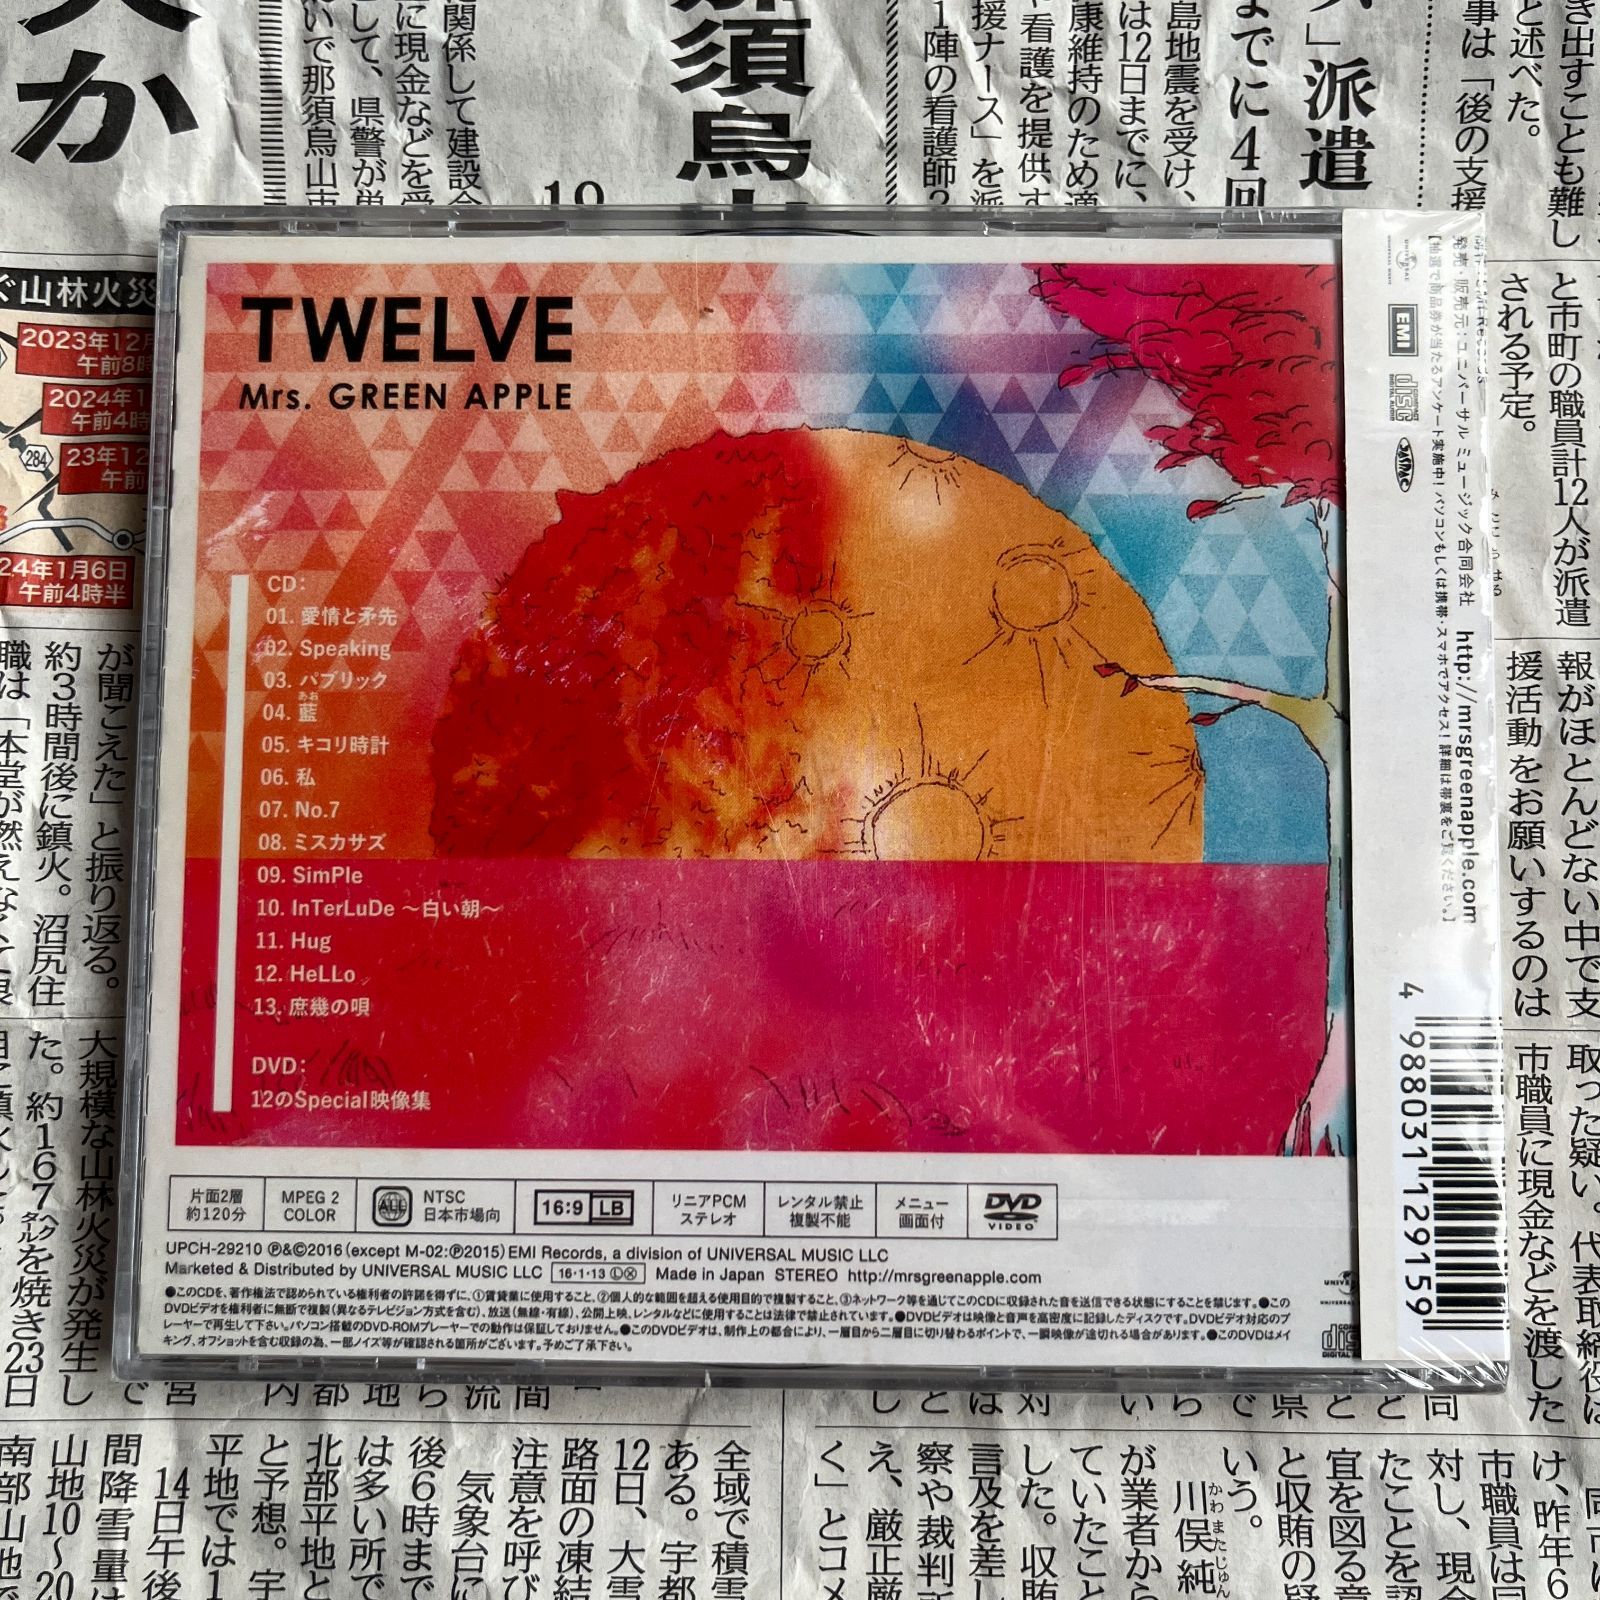 Mrs. GREEN APPLE TWELVE 初回限定盤 CD+DVD - メルカリ